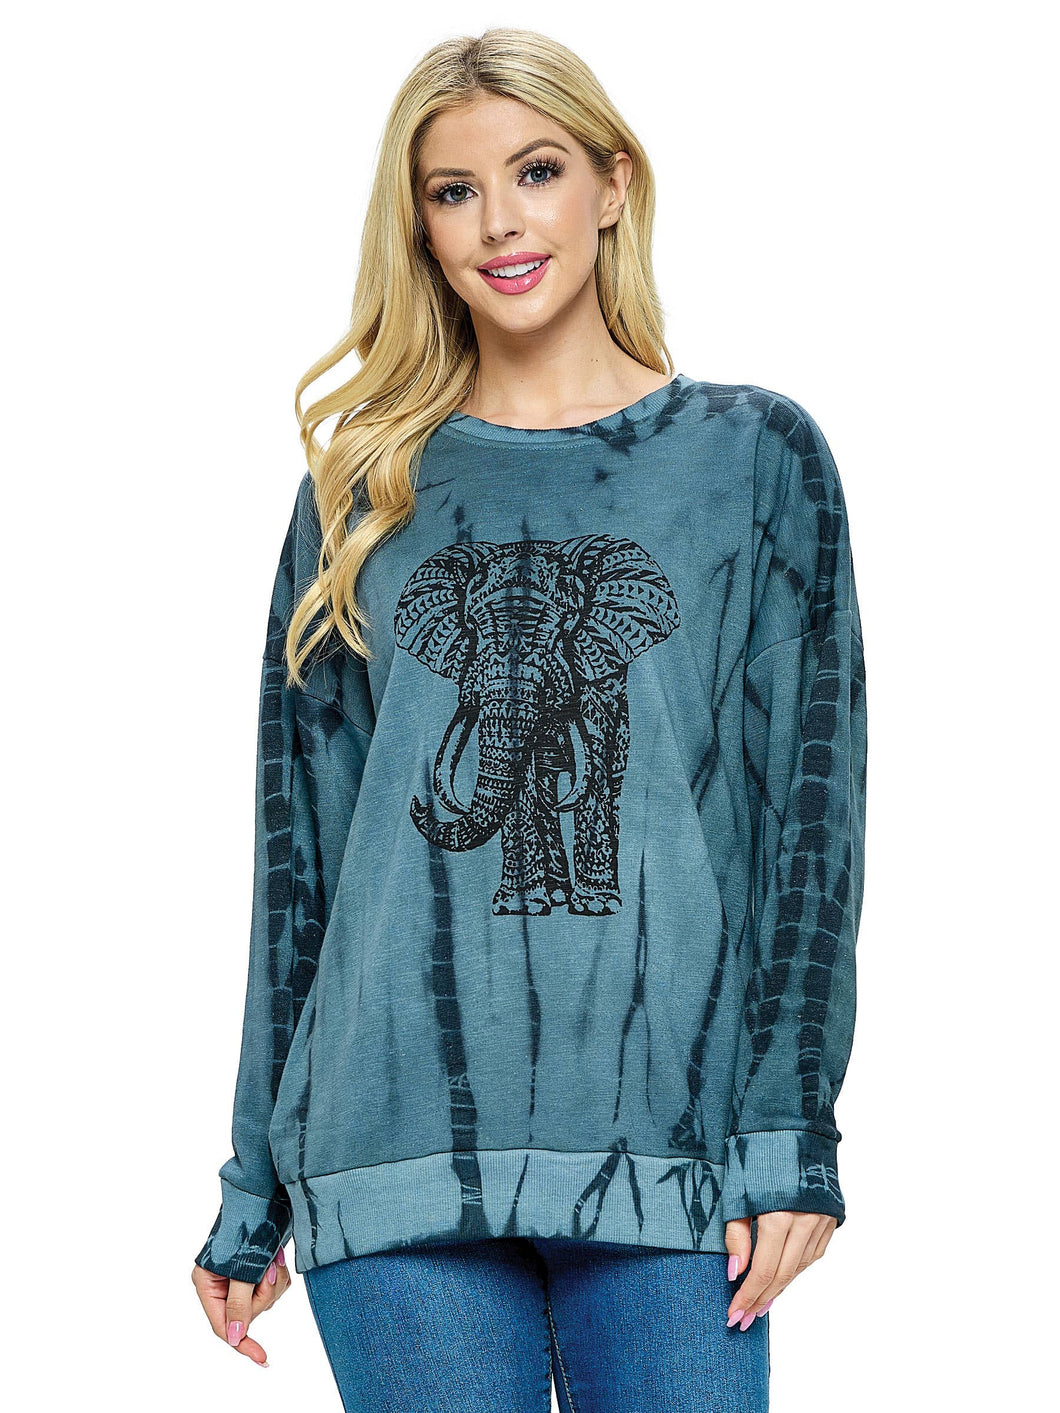 Pullover Top Boho Tie Dye Elephant Print: S/M / Gray / 60% Cotton 40% Polyester